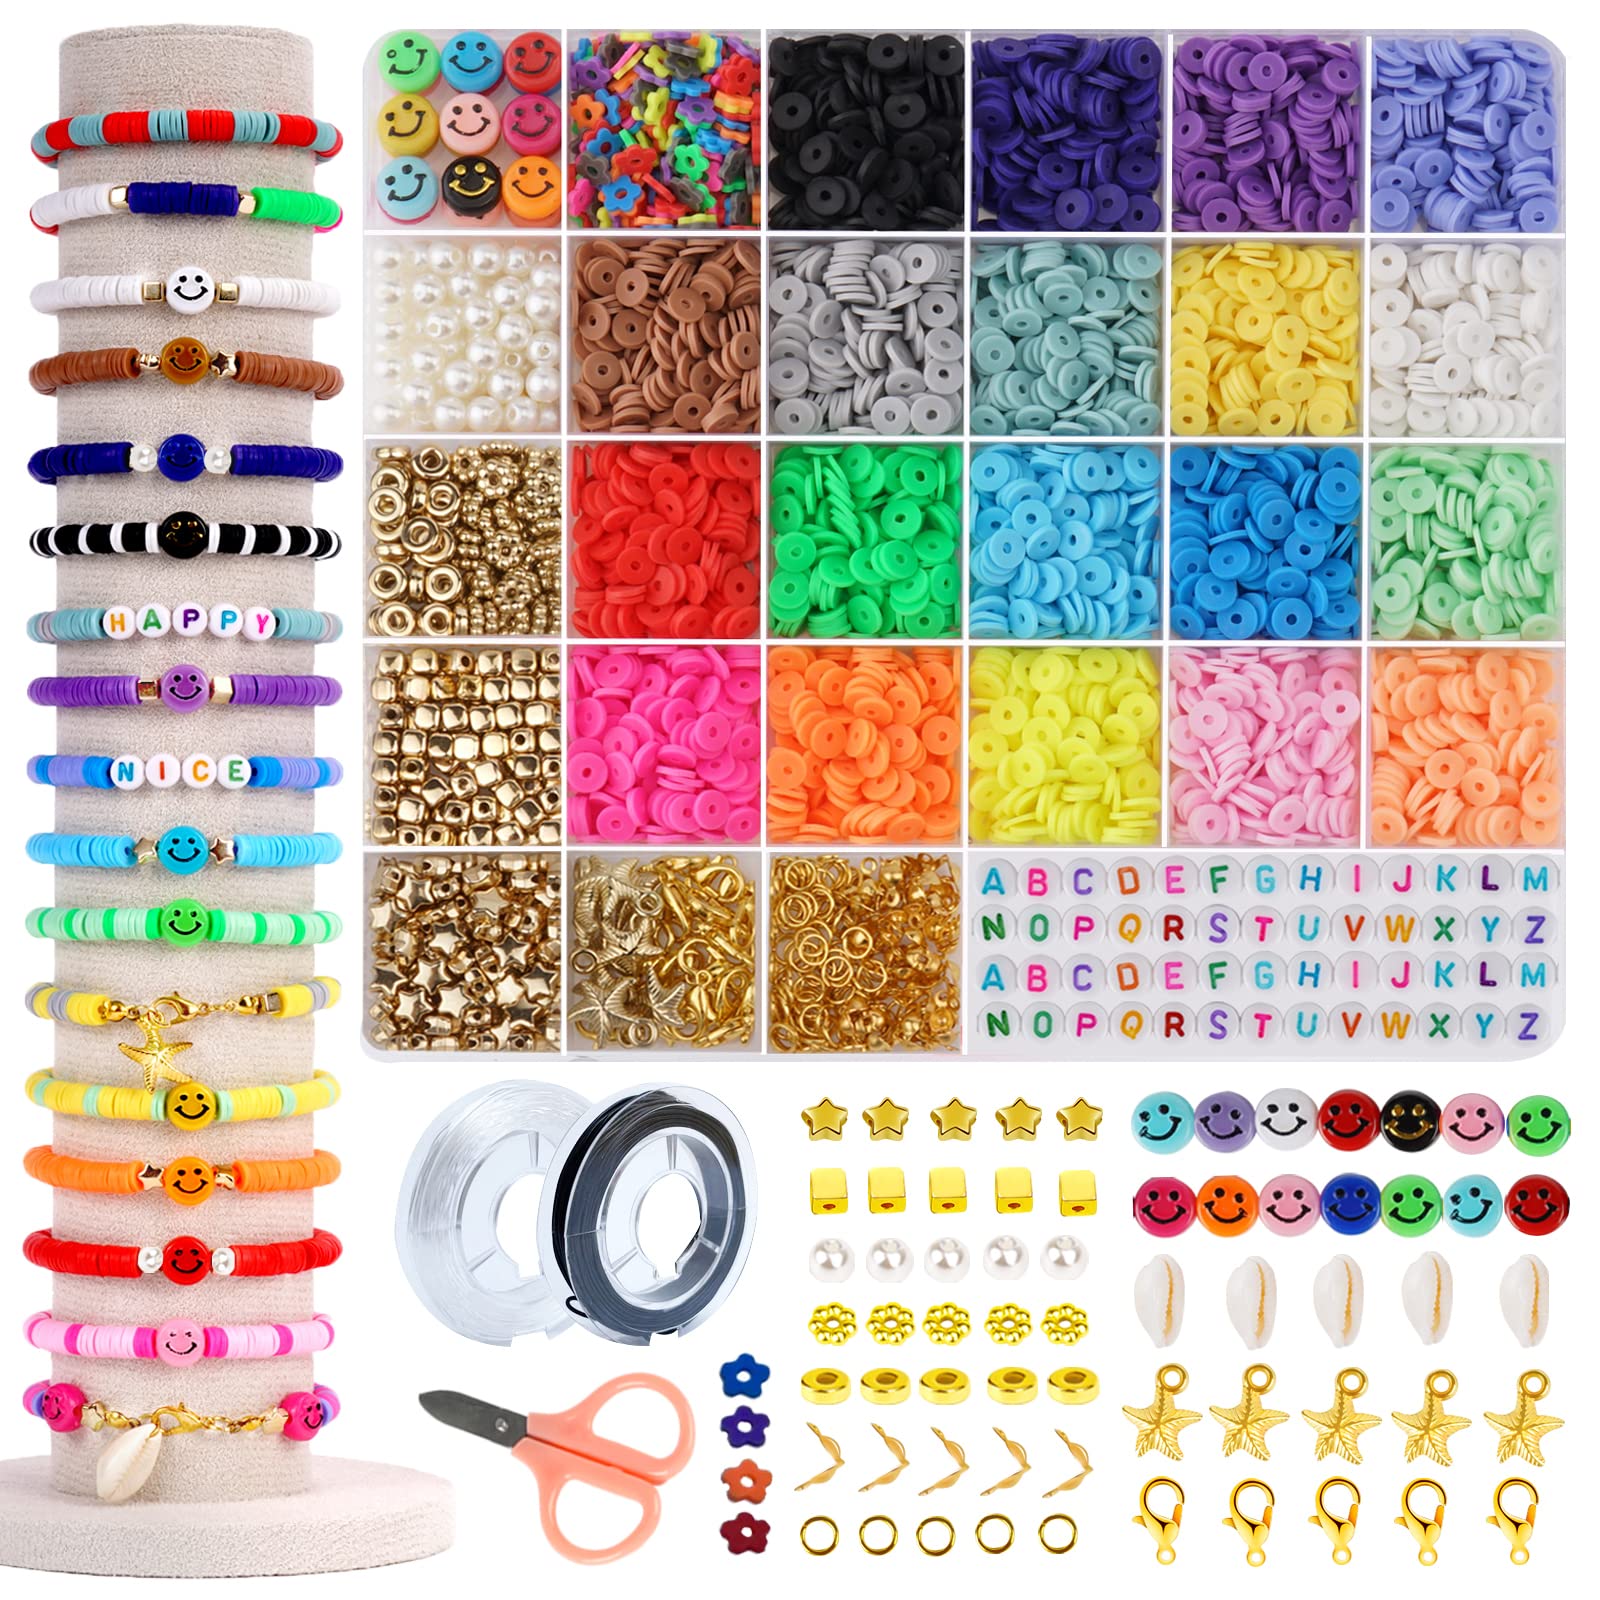 7200 Pcs Clay Beads Bracelet Making Kit, Preppy Friendship Flat